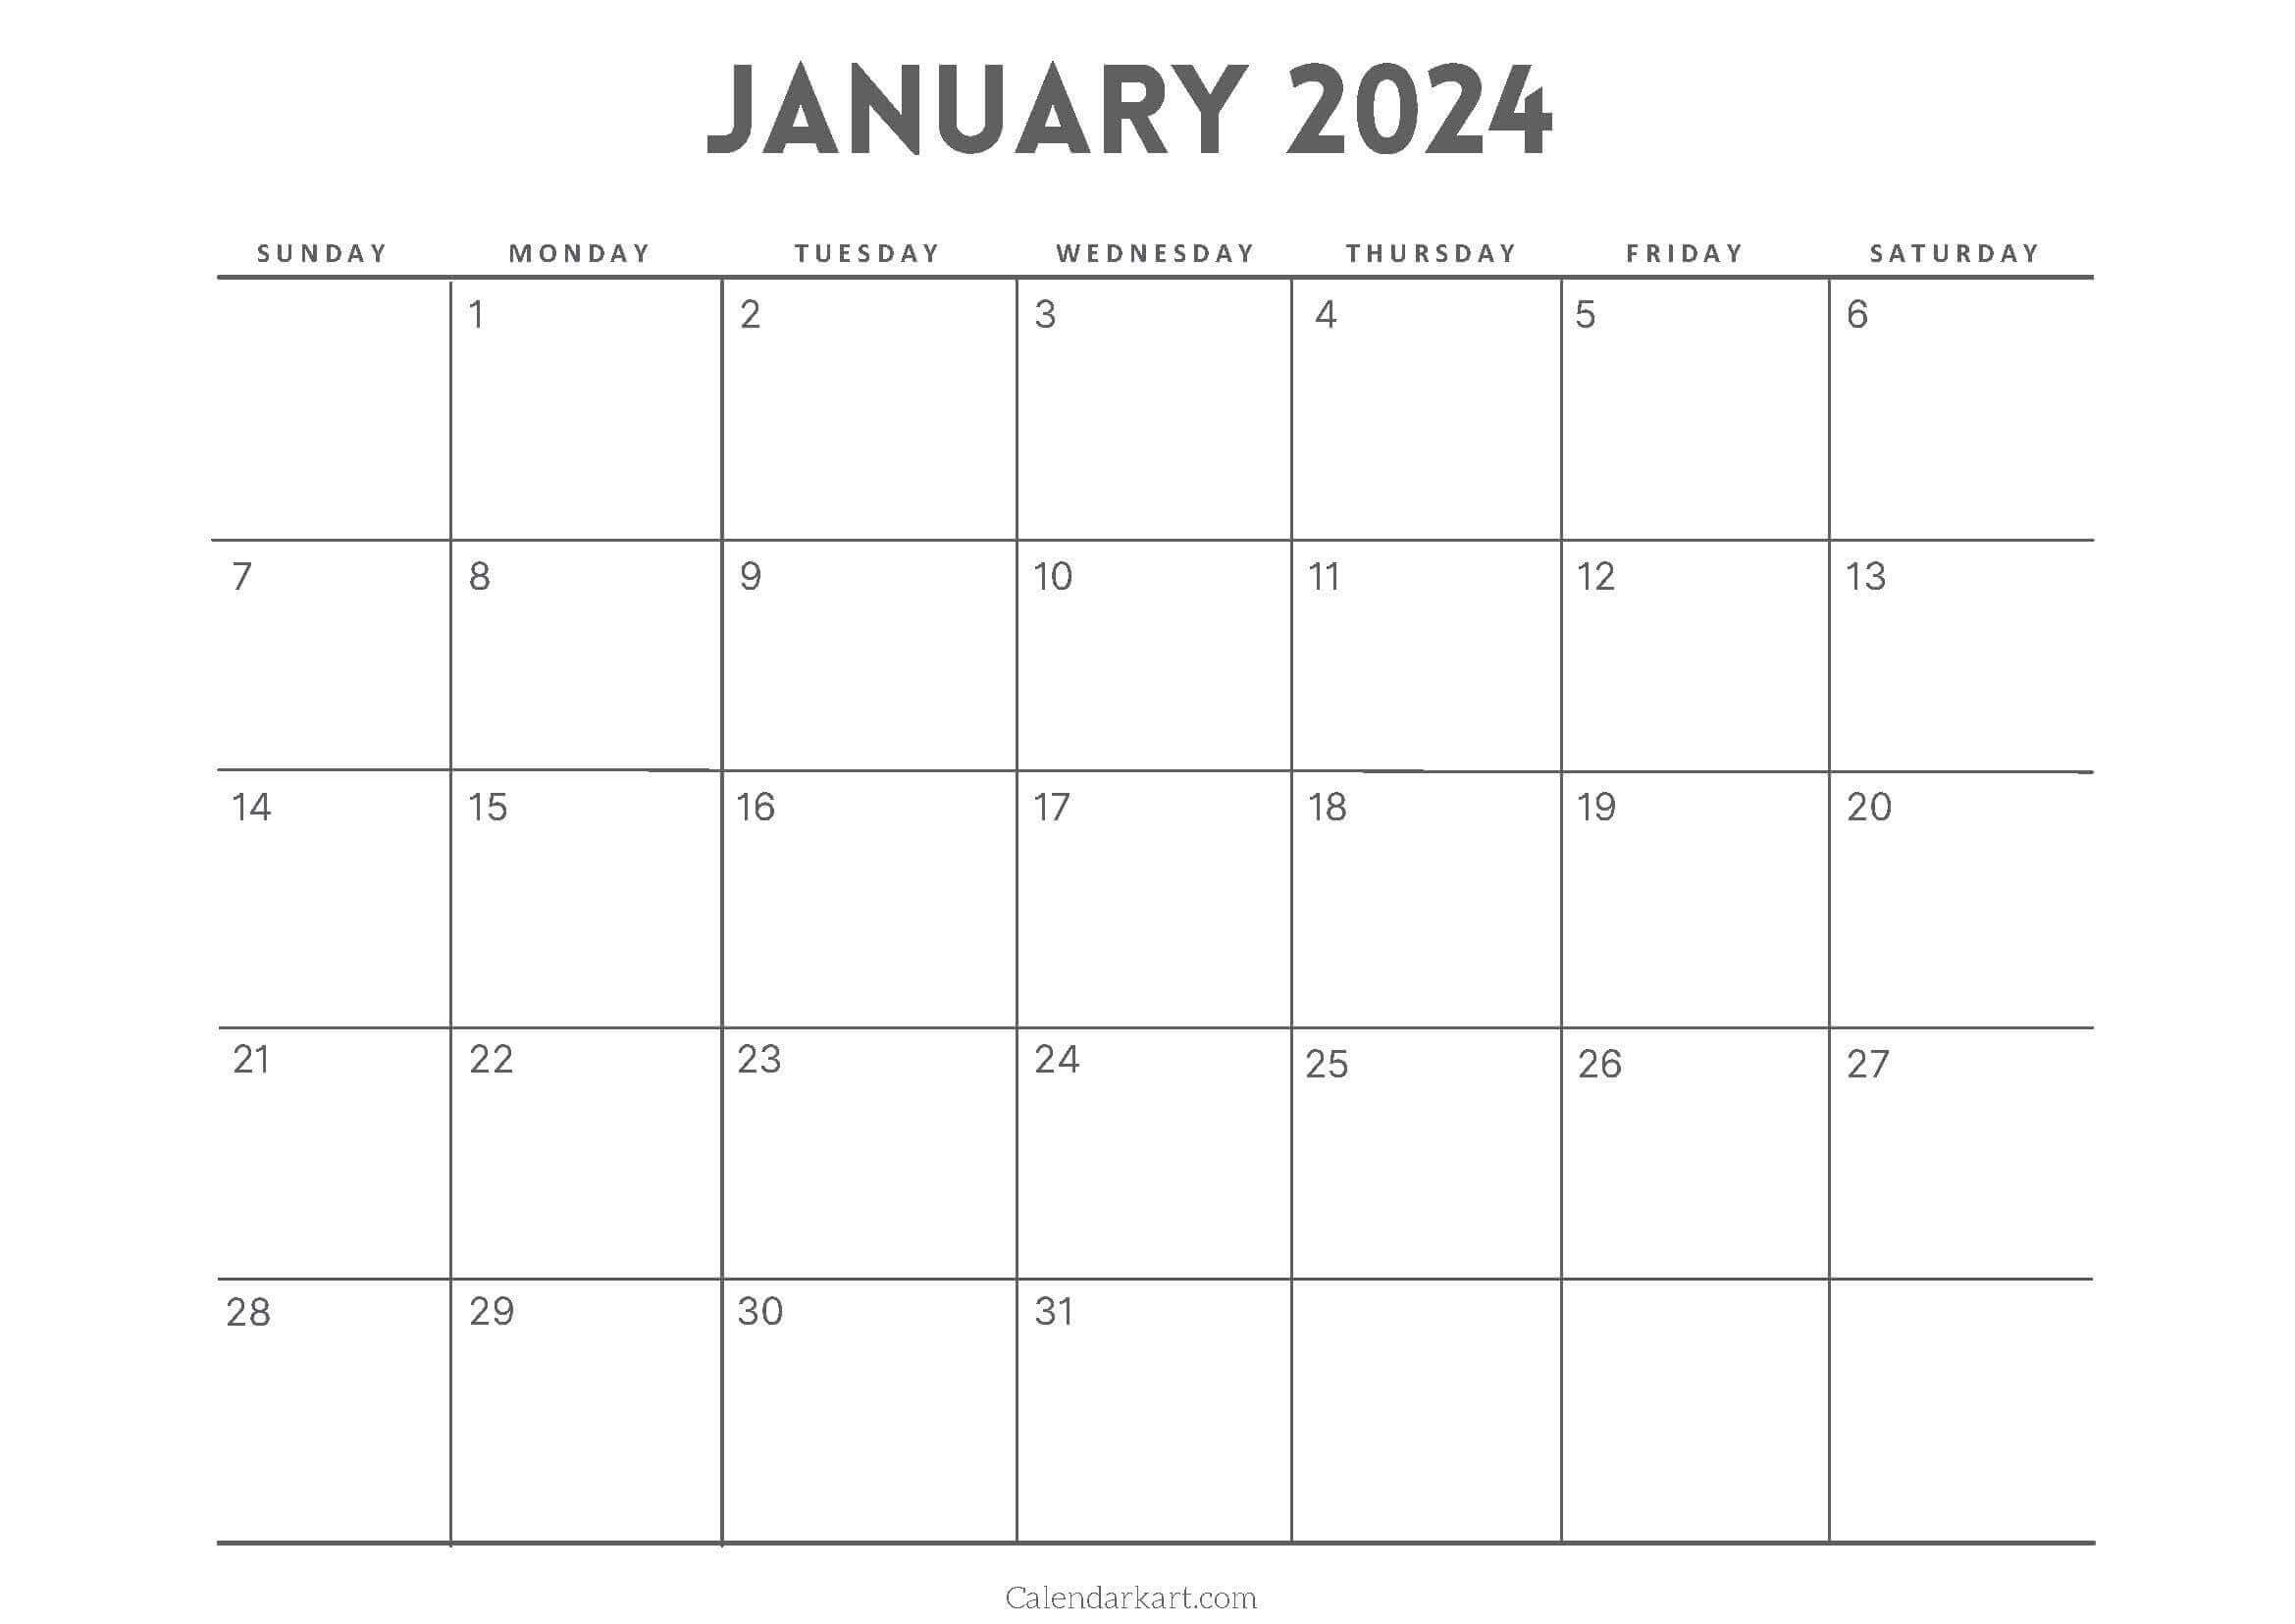 Free Printable January 2024 Calendars - Calendarkart | Blank 2024 Calendar Printable